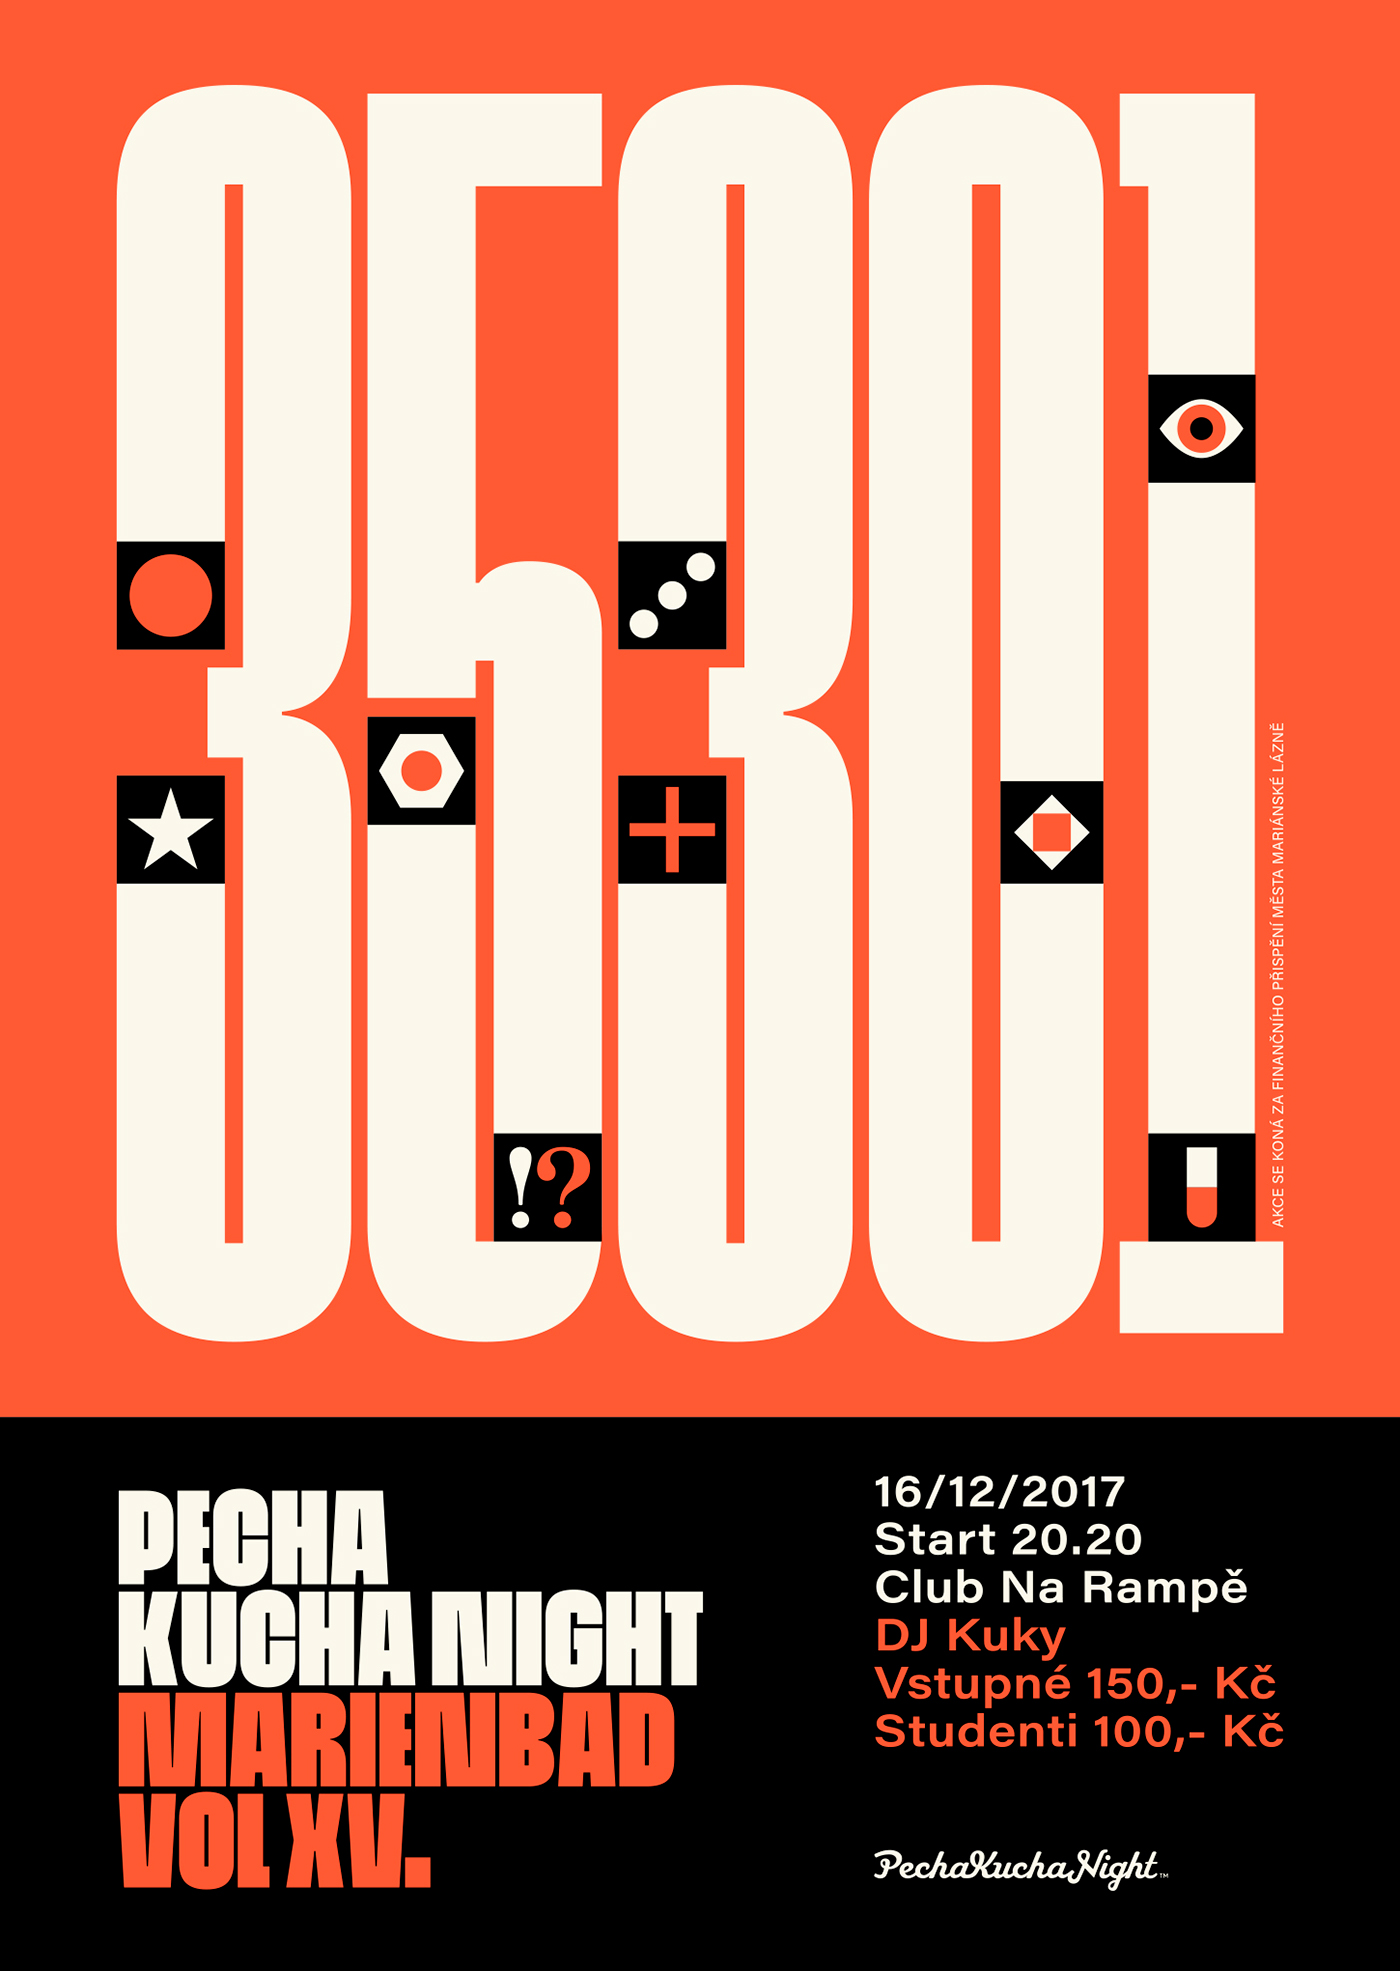 pecha numbers orange poster Icon minimal book visual infographic world